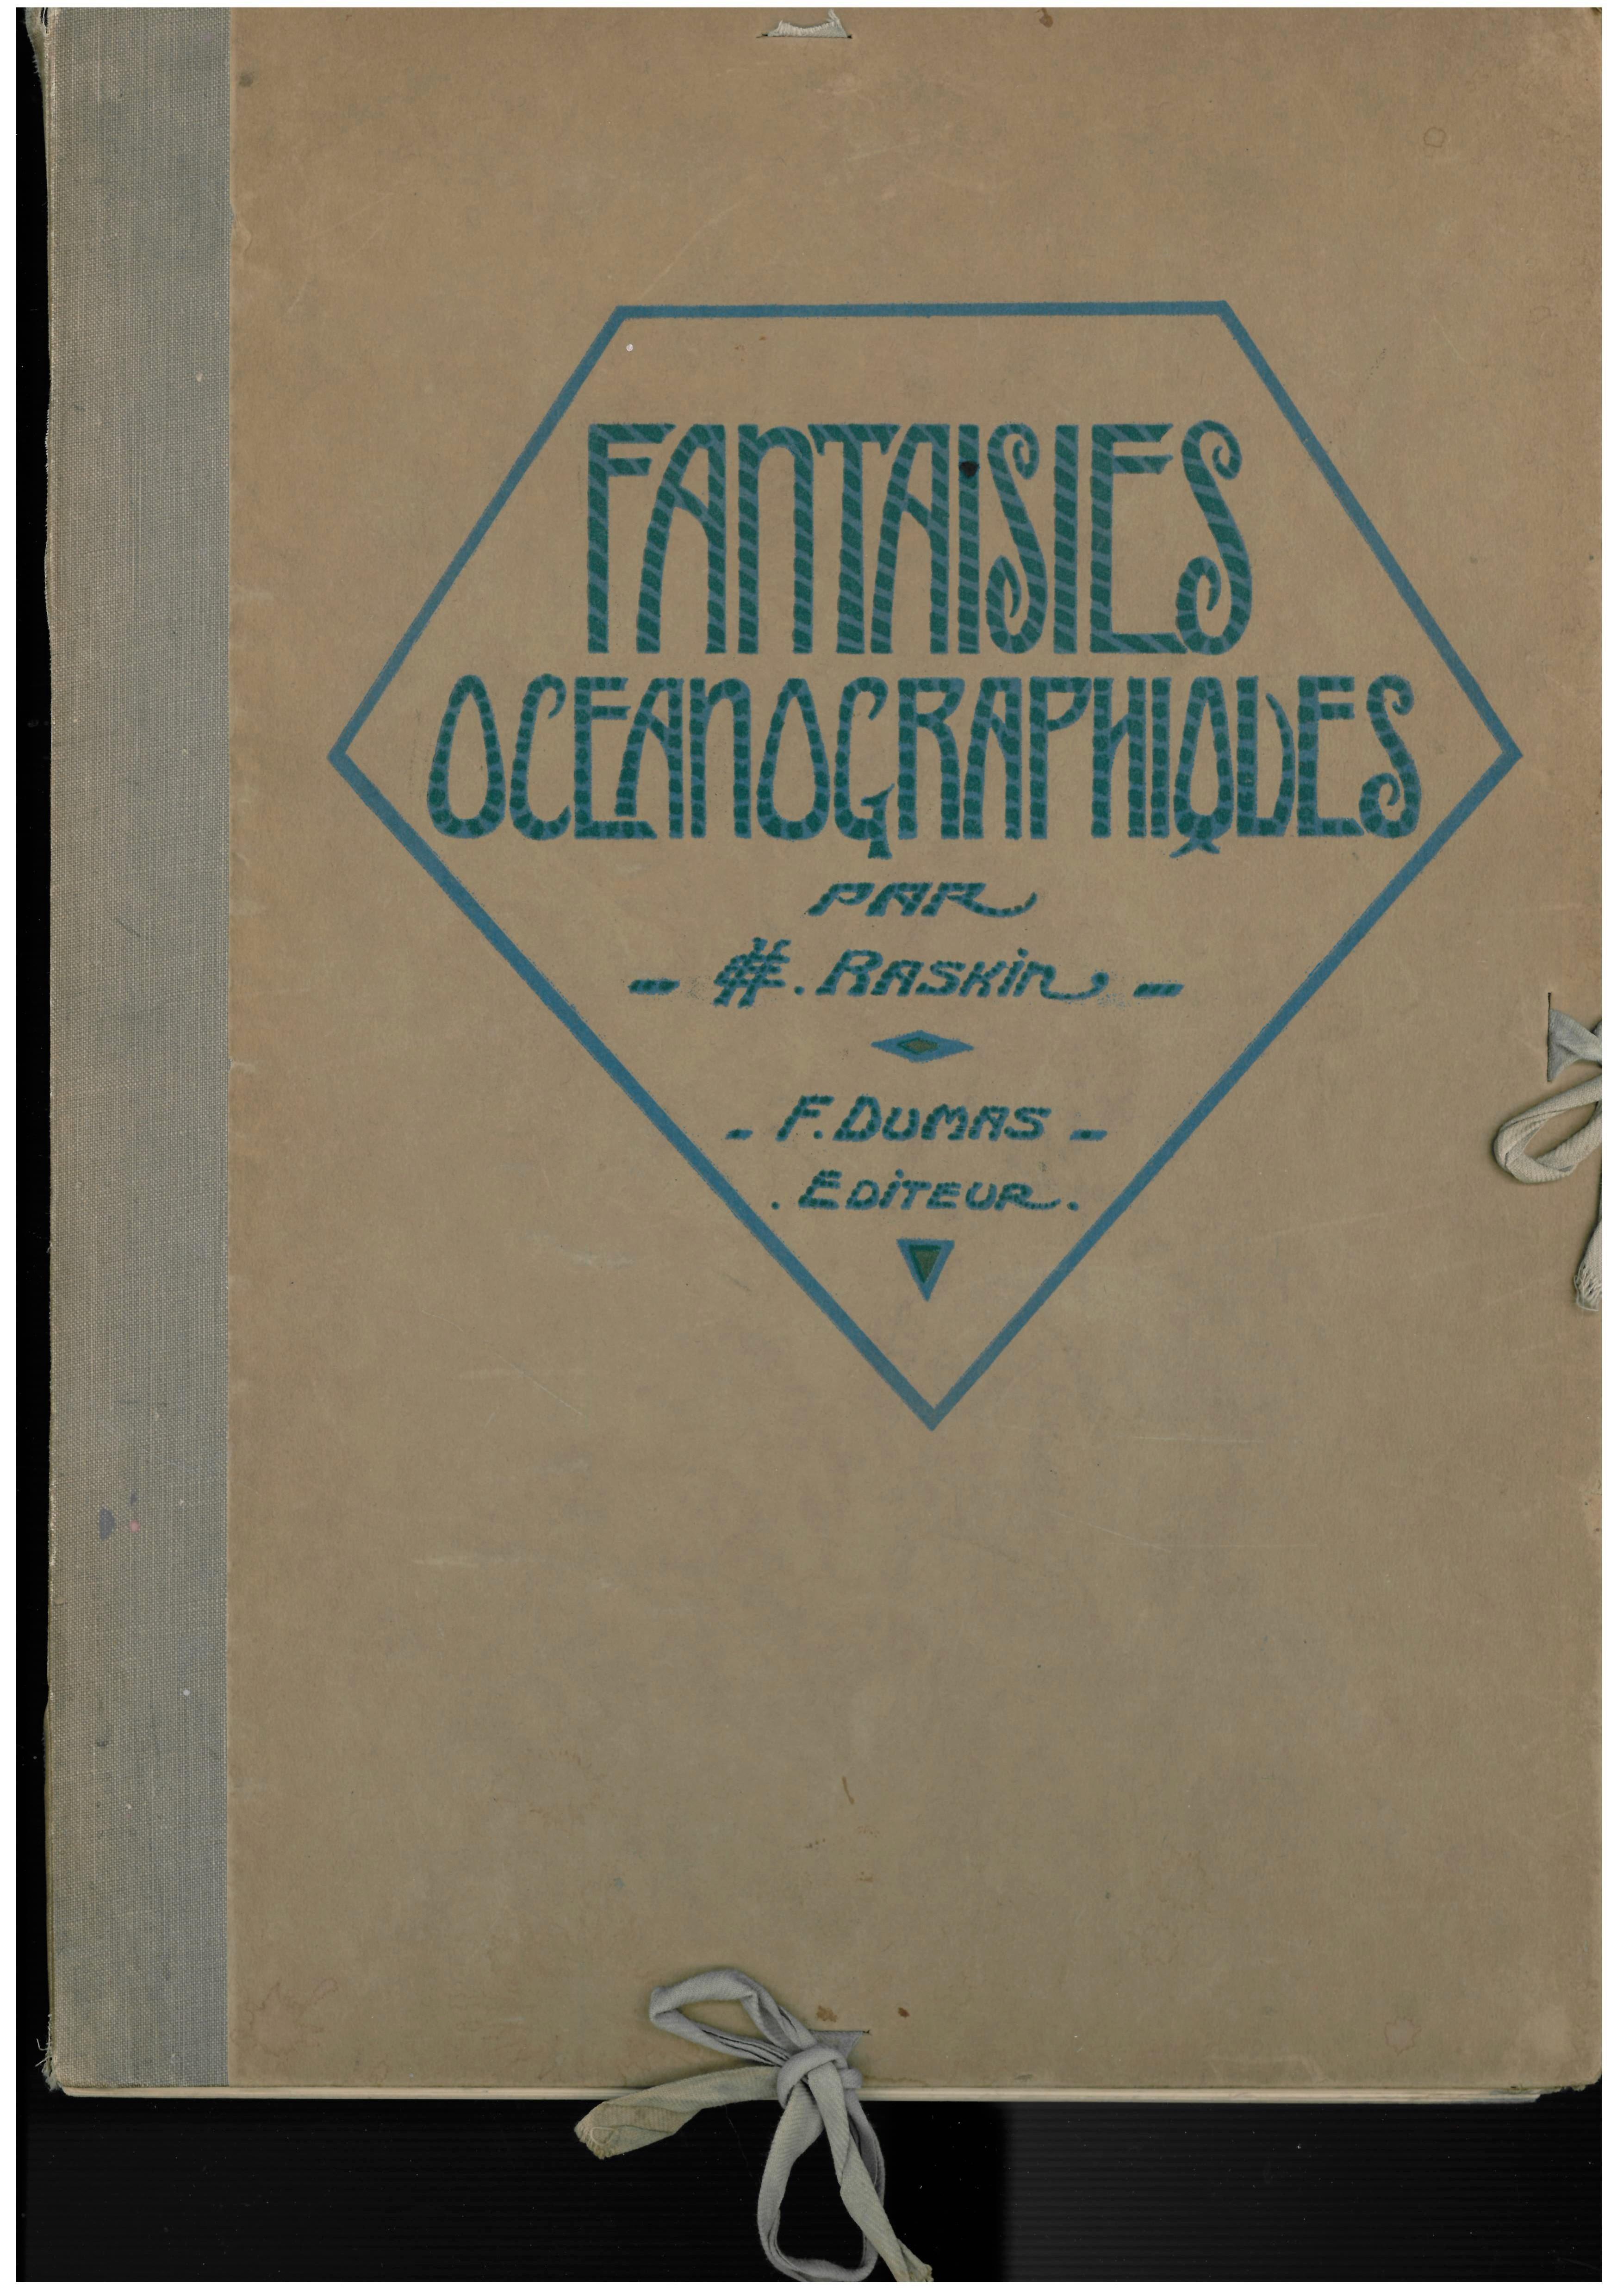 Fantaisies Oceanographiques - Collection of Art Deco Ocean Fantasies Designs 6